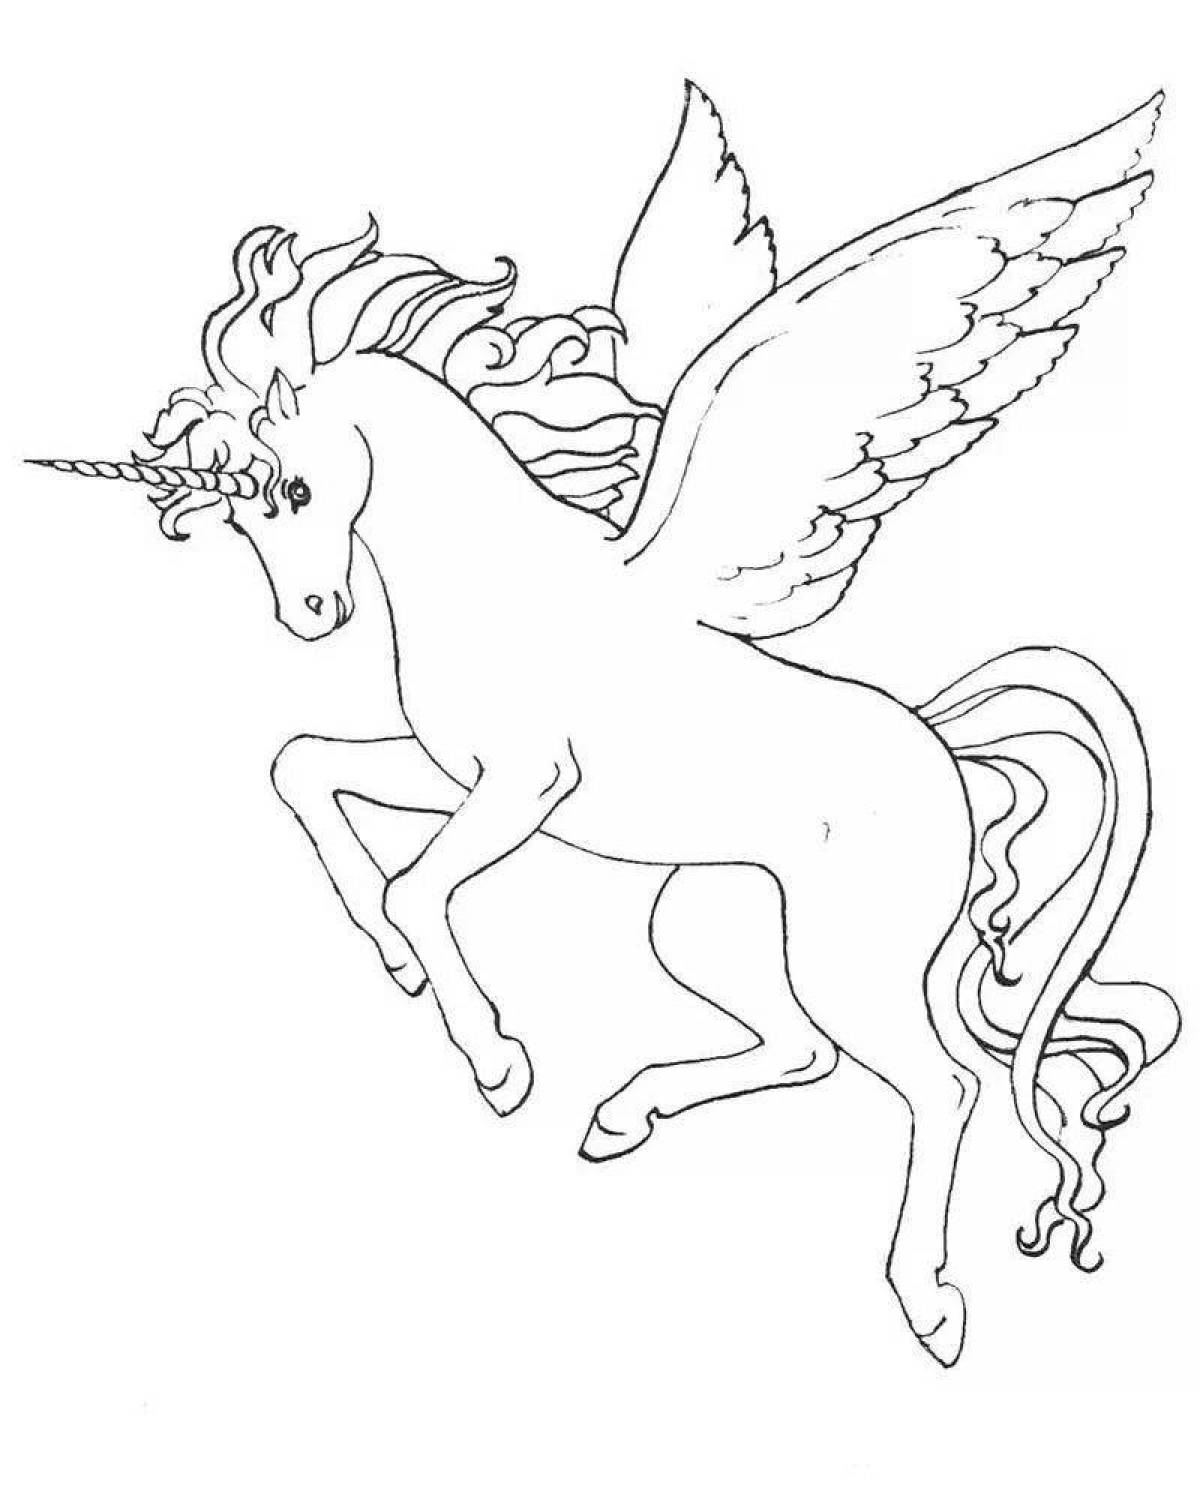 Pegasus and unicorns coloring page